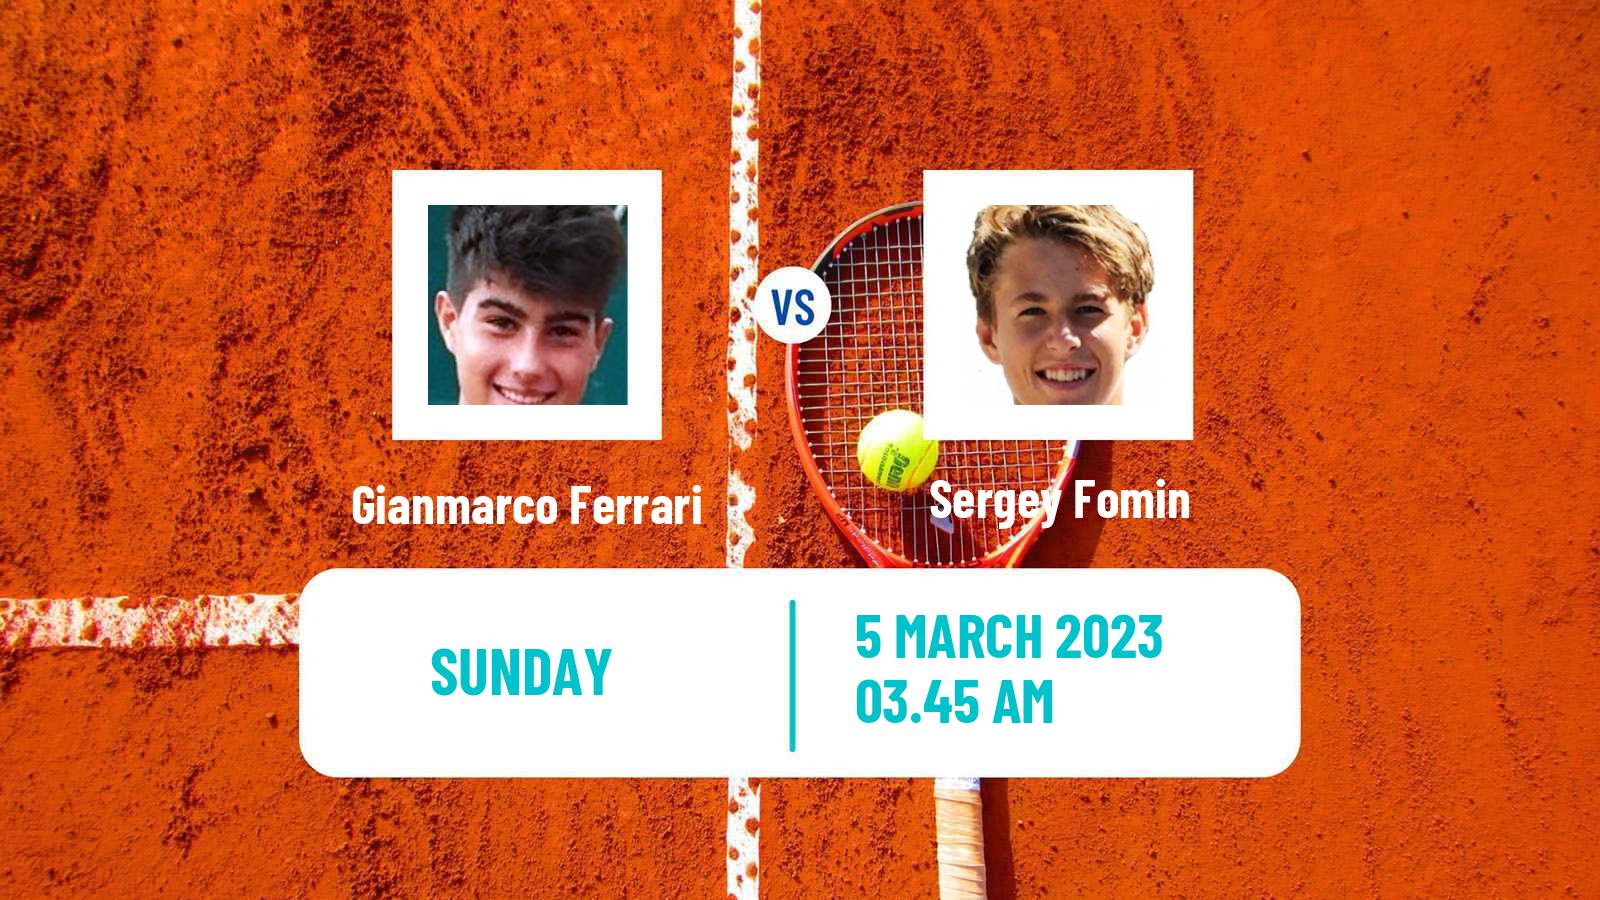 Tennis ATP Challenger Gianmarco Ferrari - Sergey Fomin